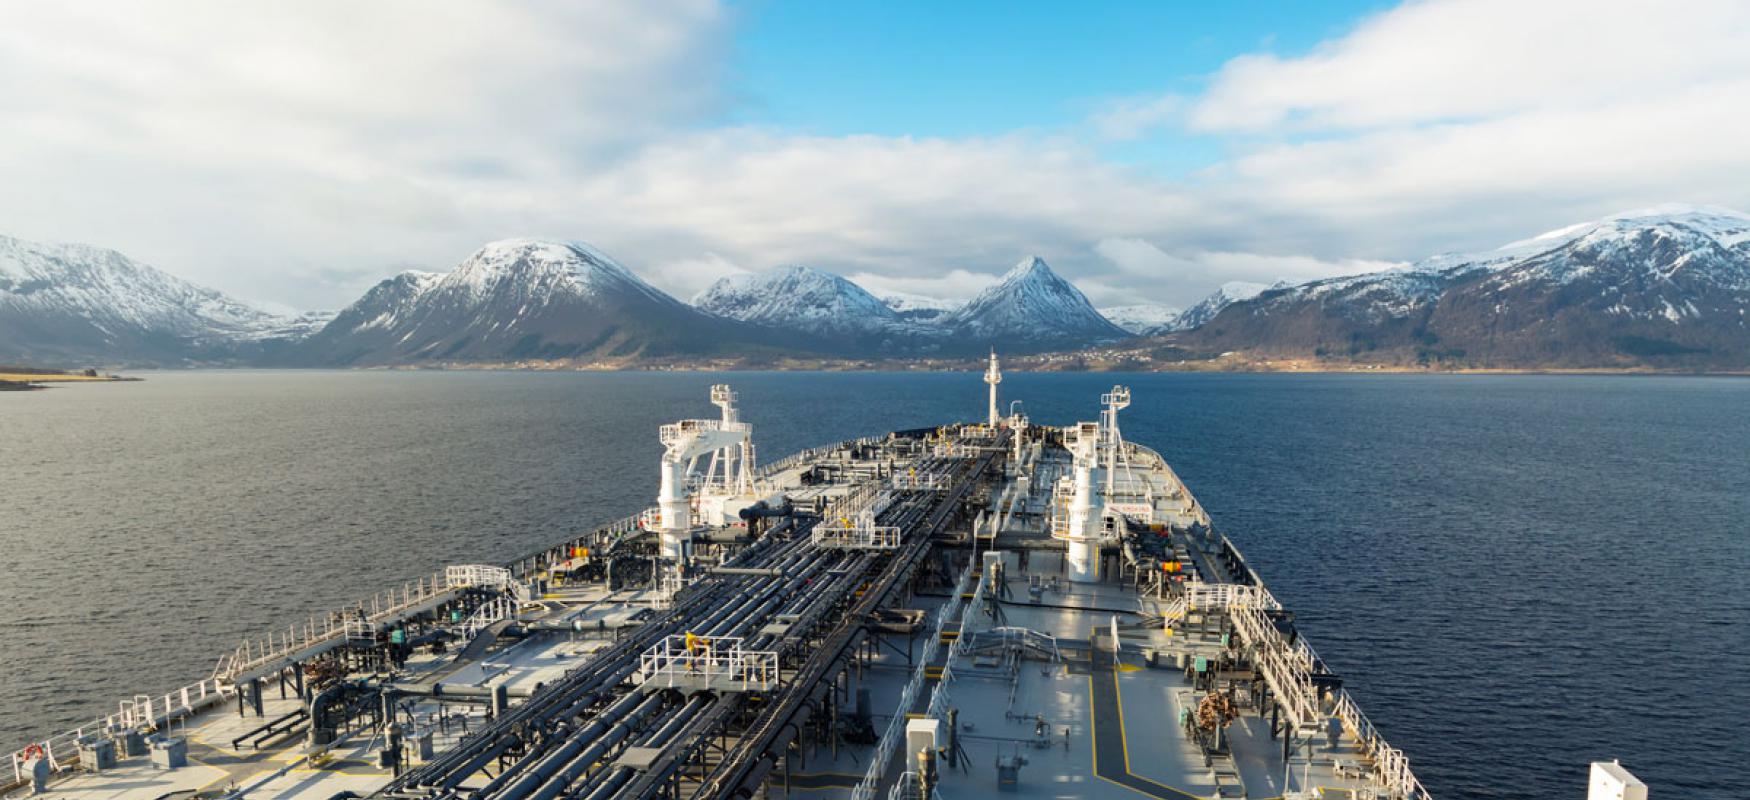 Oil tanker in a Norwegian fjord.